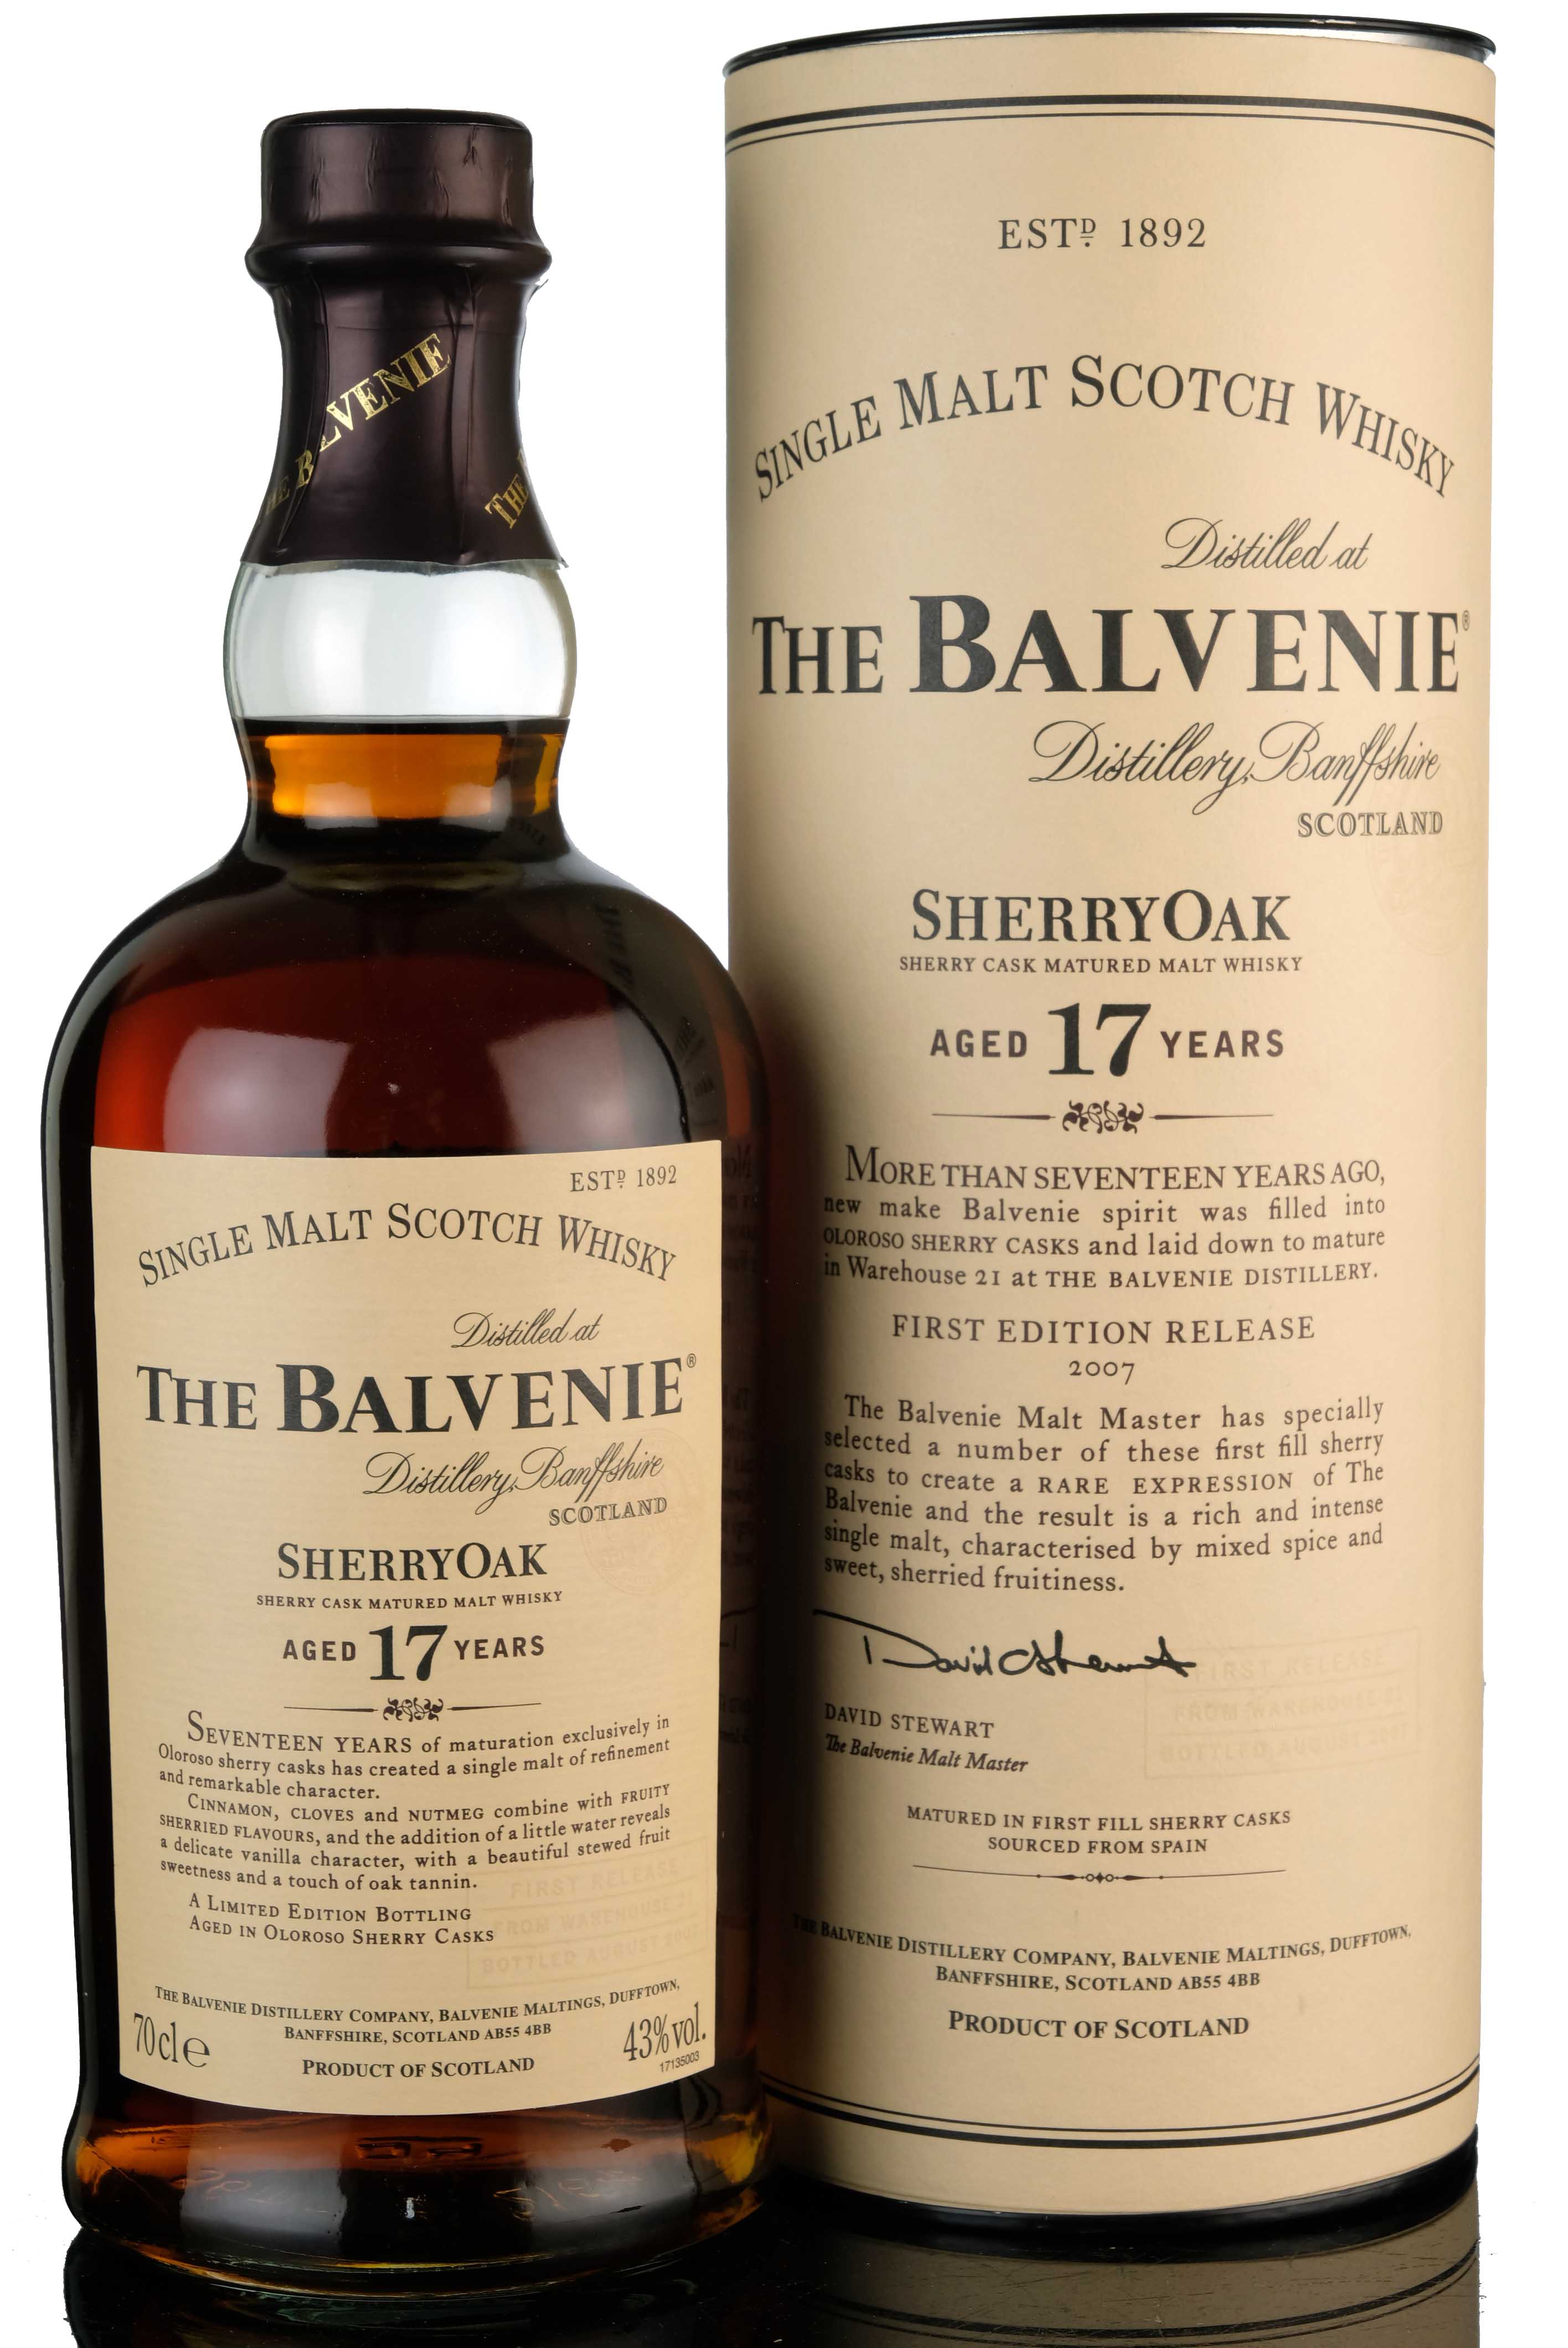 Balvenie 17 Year Old - Sherry Oak - 2007 Release